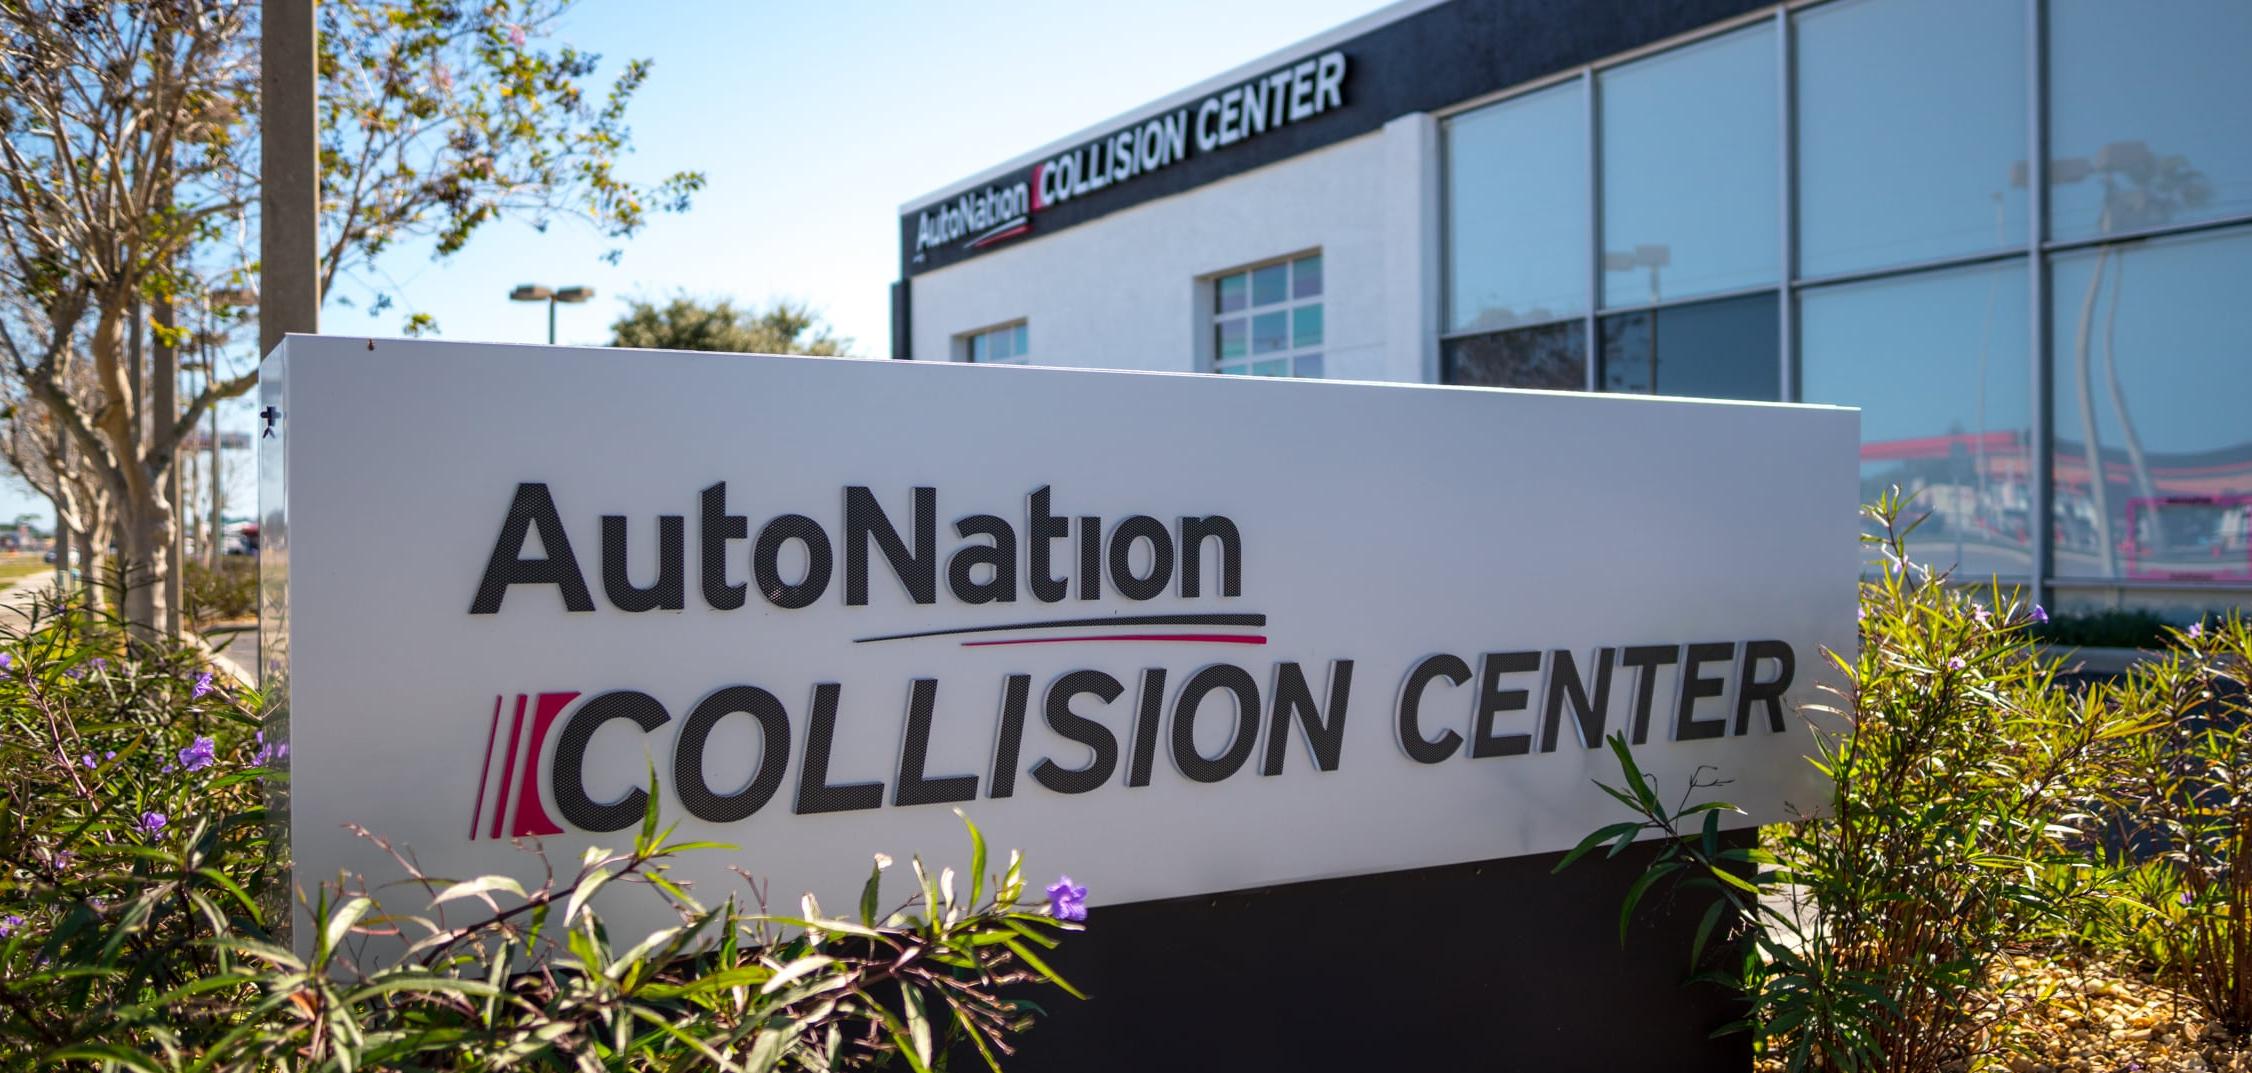 View of AutoNation Collision Center sign at AutoNation Chevrolet West Amarillo